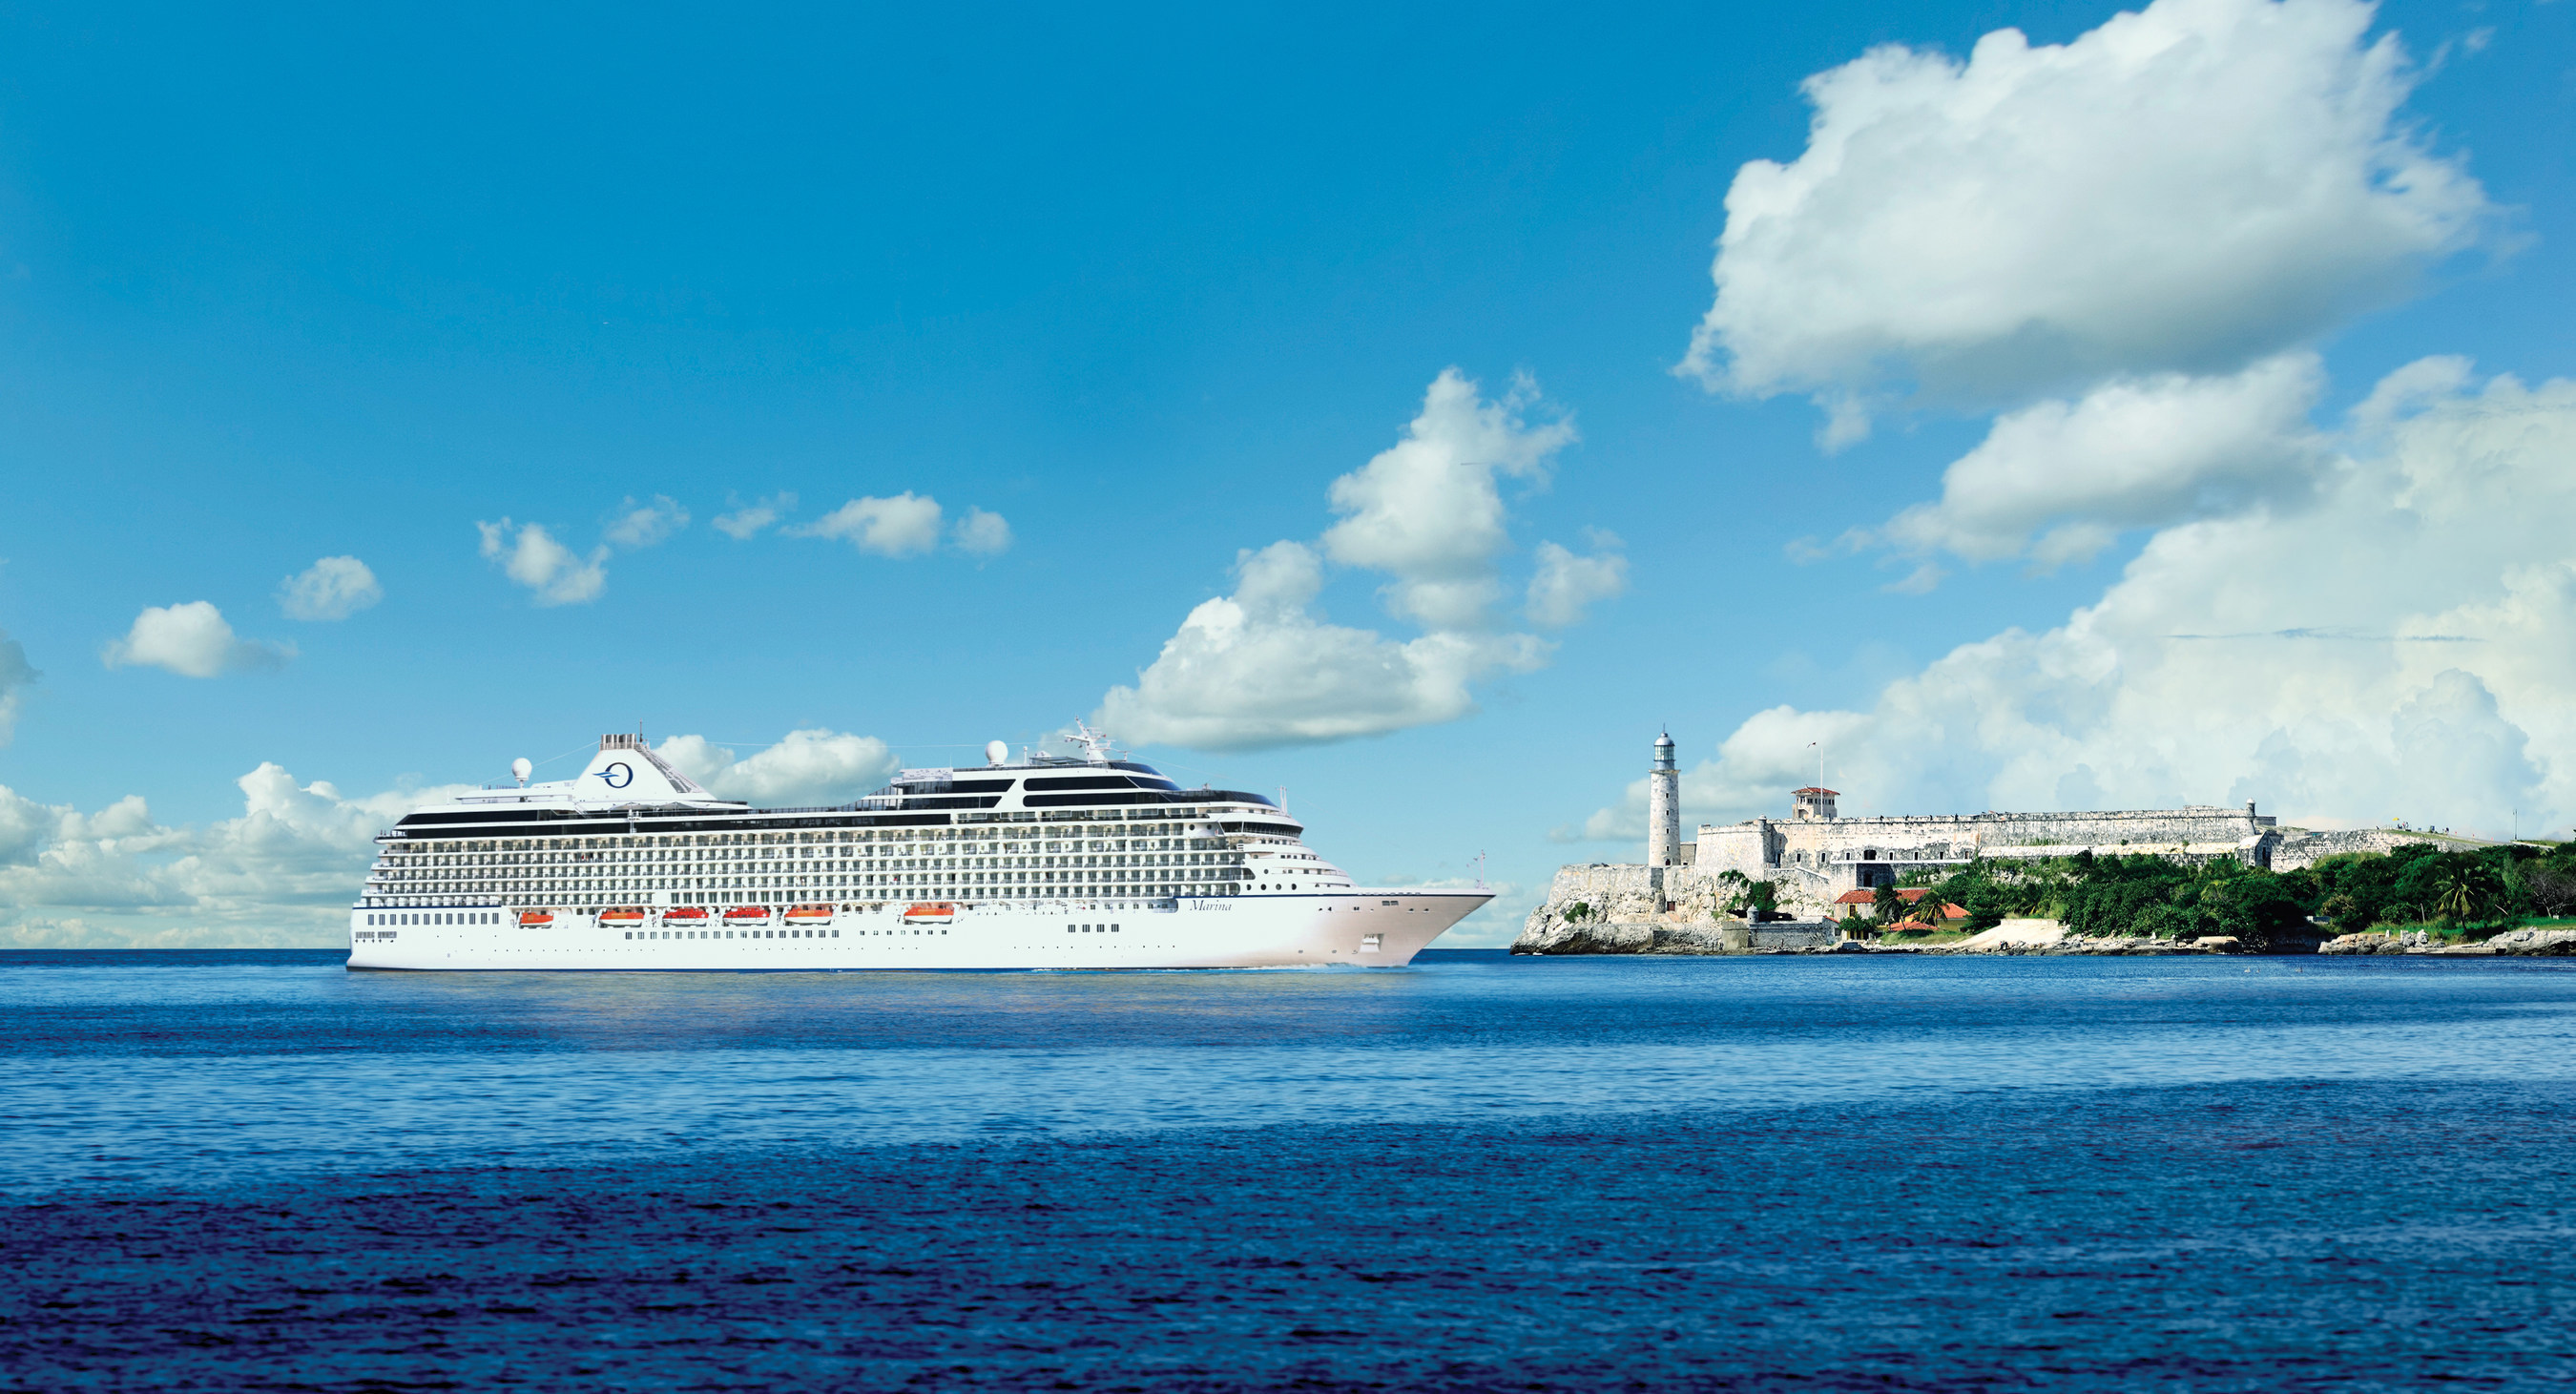 Oceania Cruises' Marina in Havana, Cuba